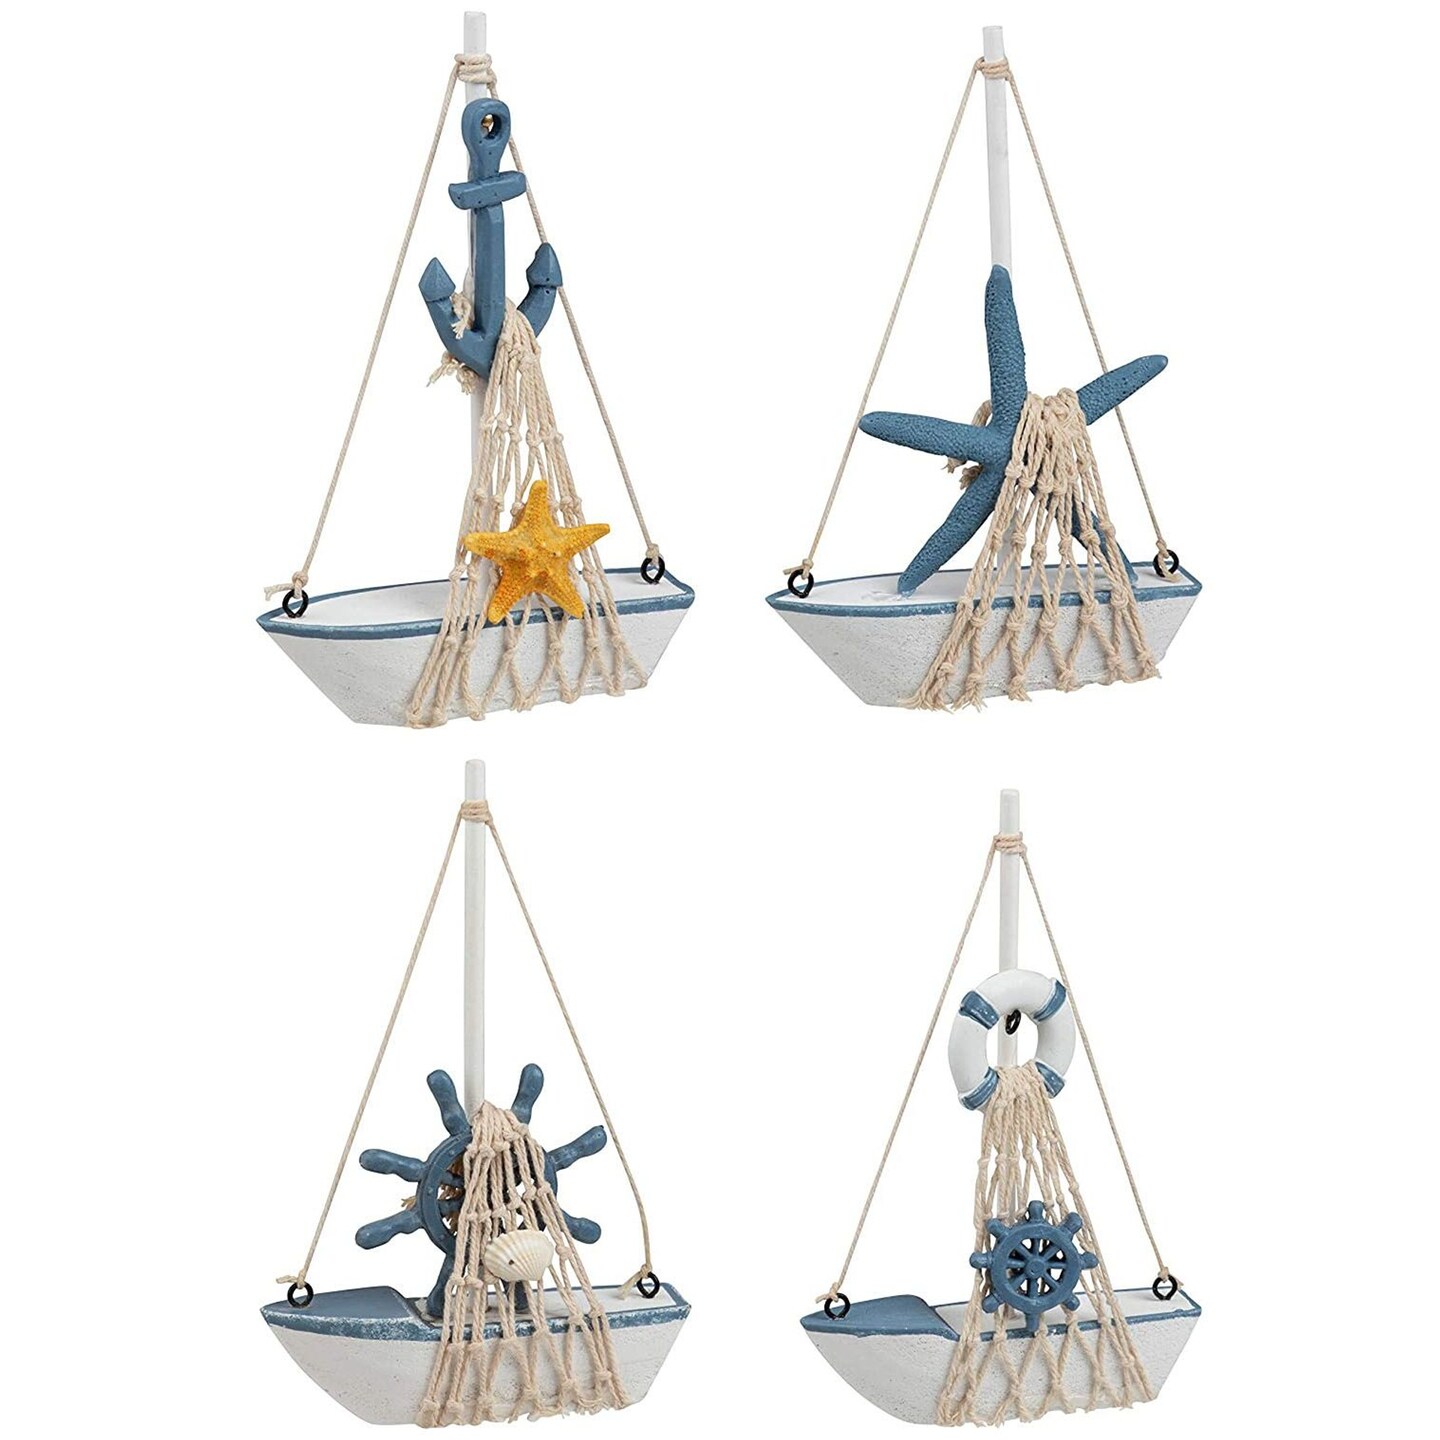 Set of 4 Mini Wooden Sailboat Models for Beach Nautical Home Decor, Miniature Boat Decorations